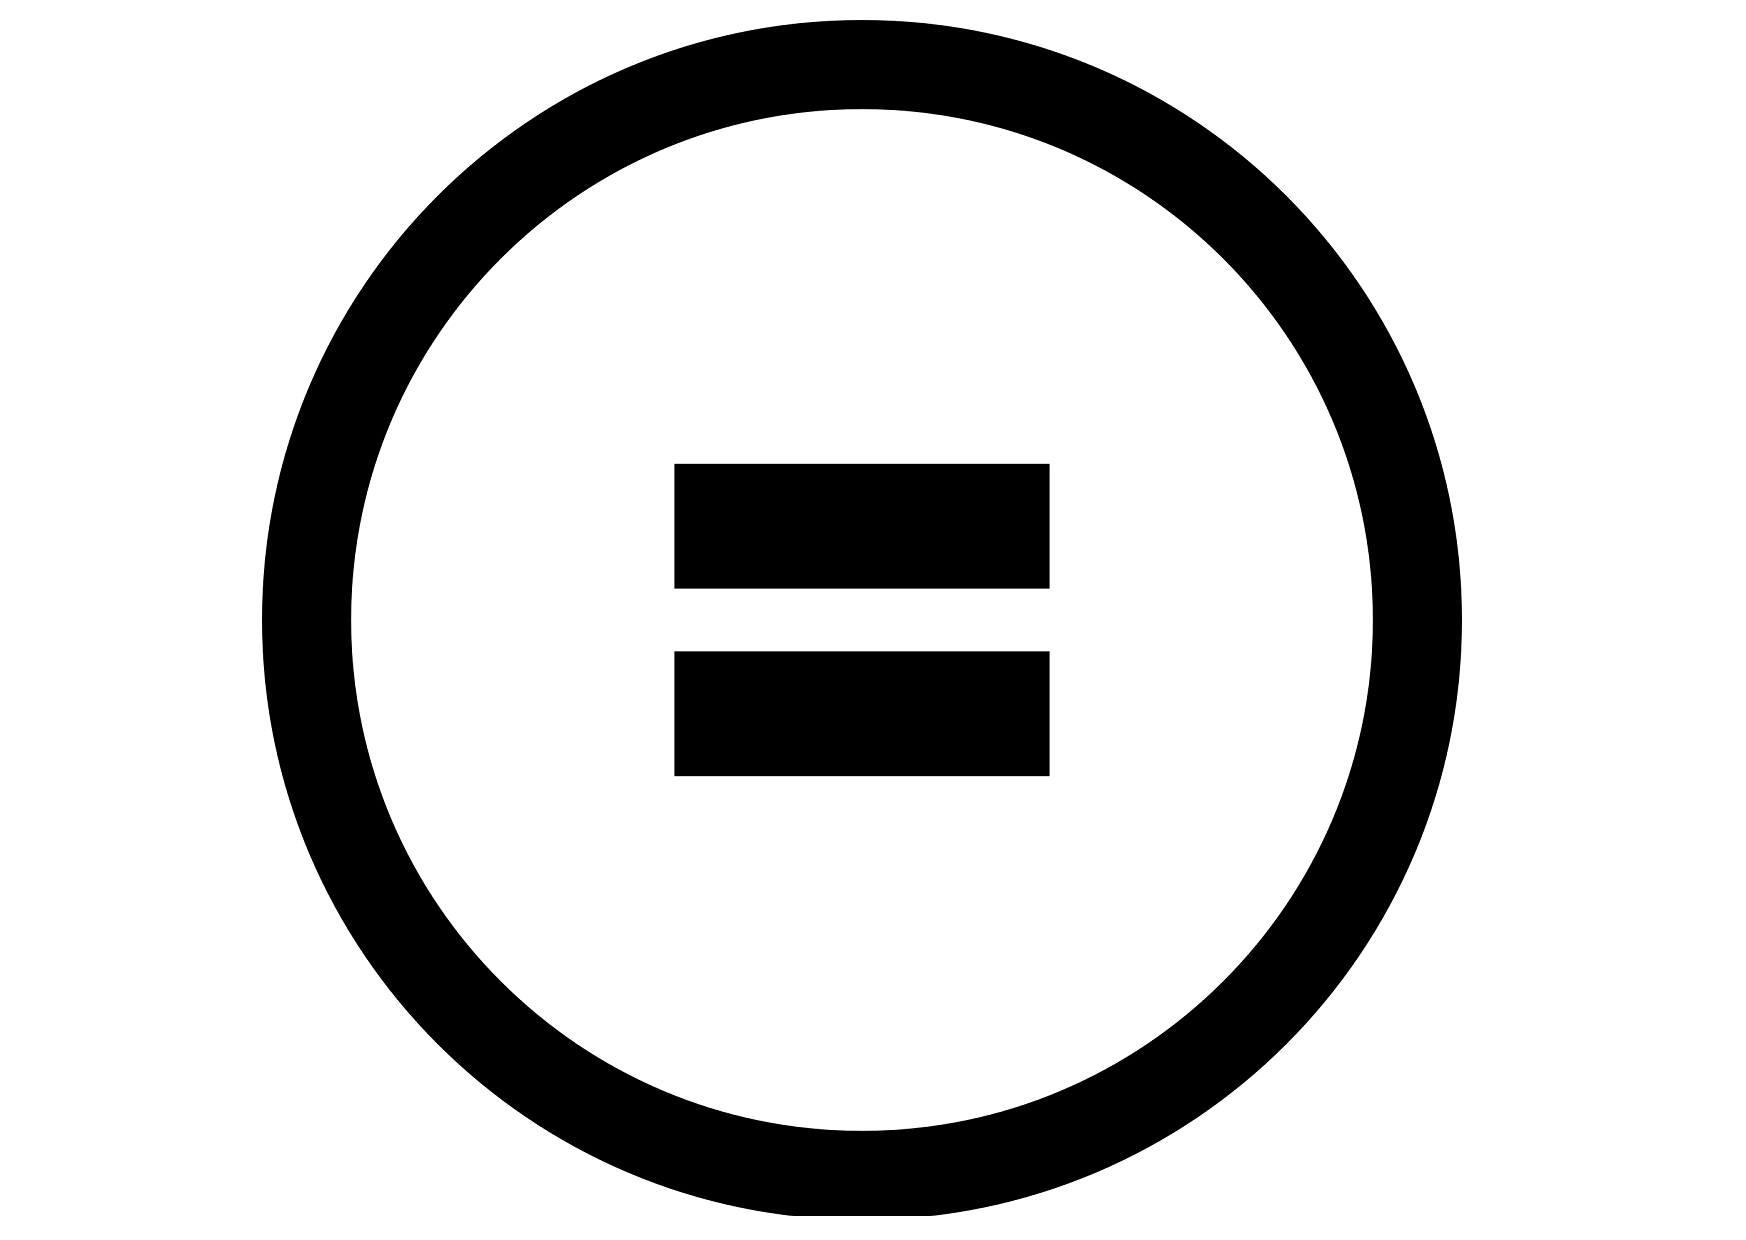 Символ равно. Знак равенства. Математические знаки. Значок равно.